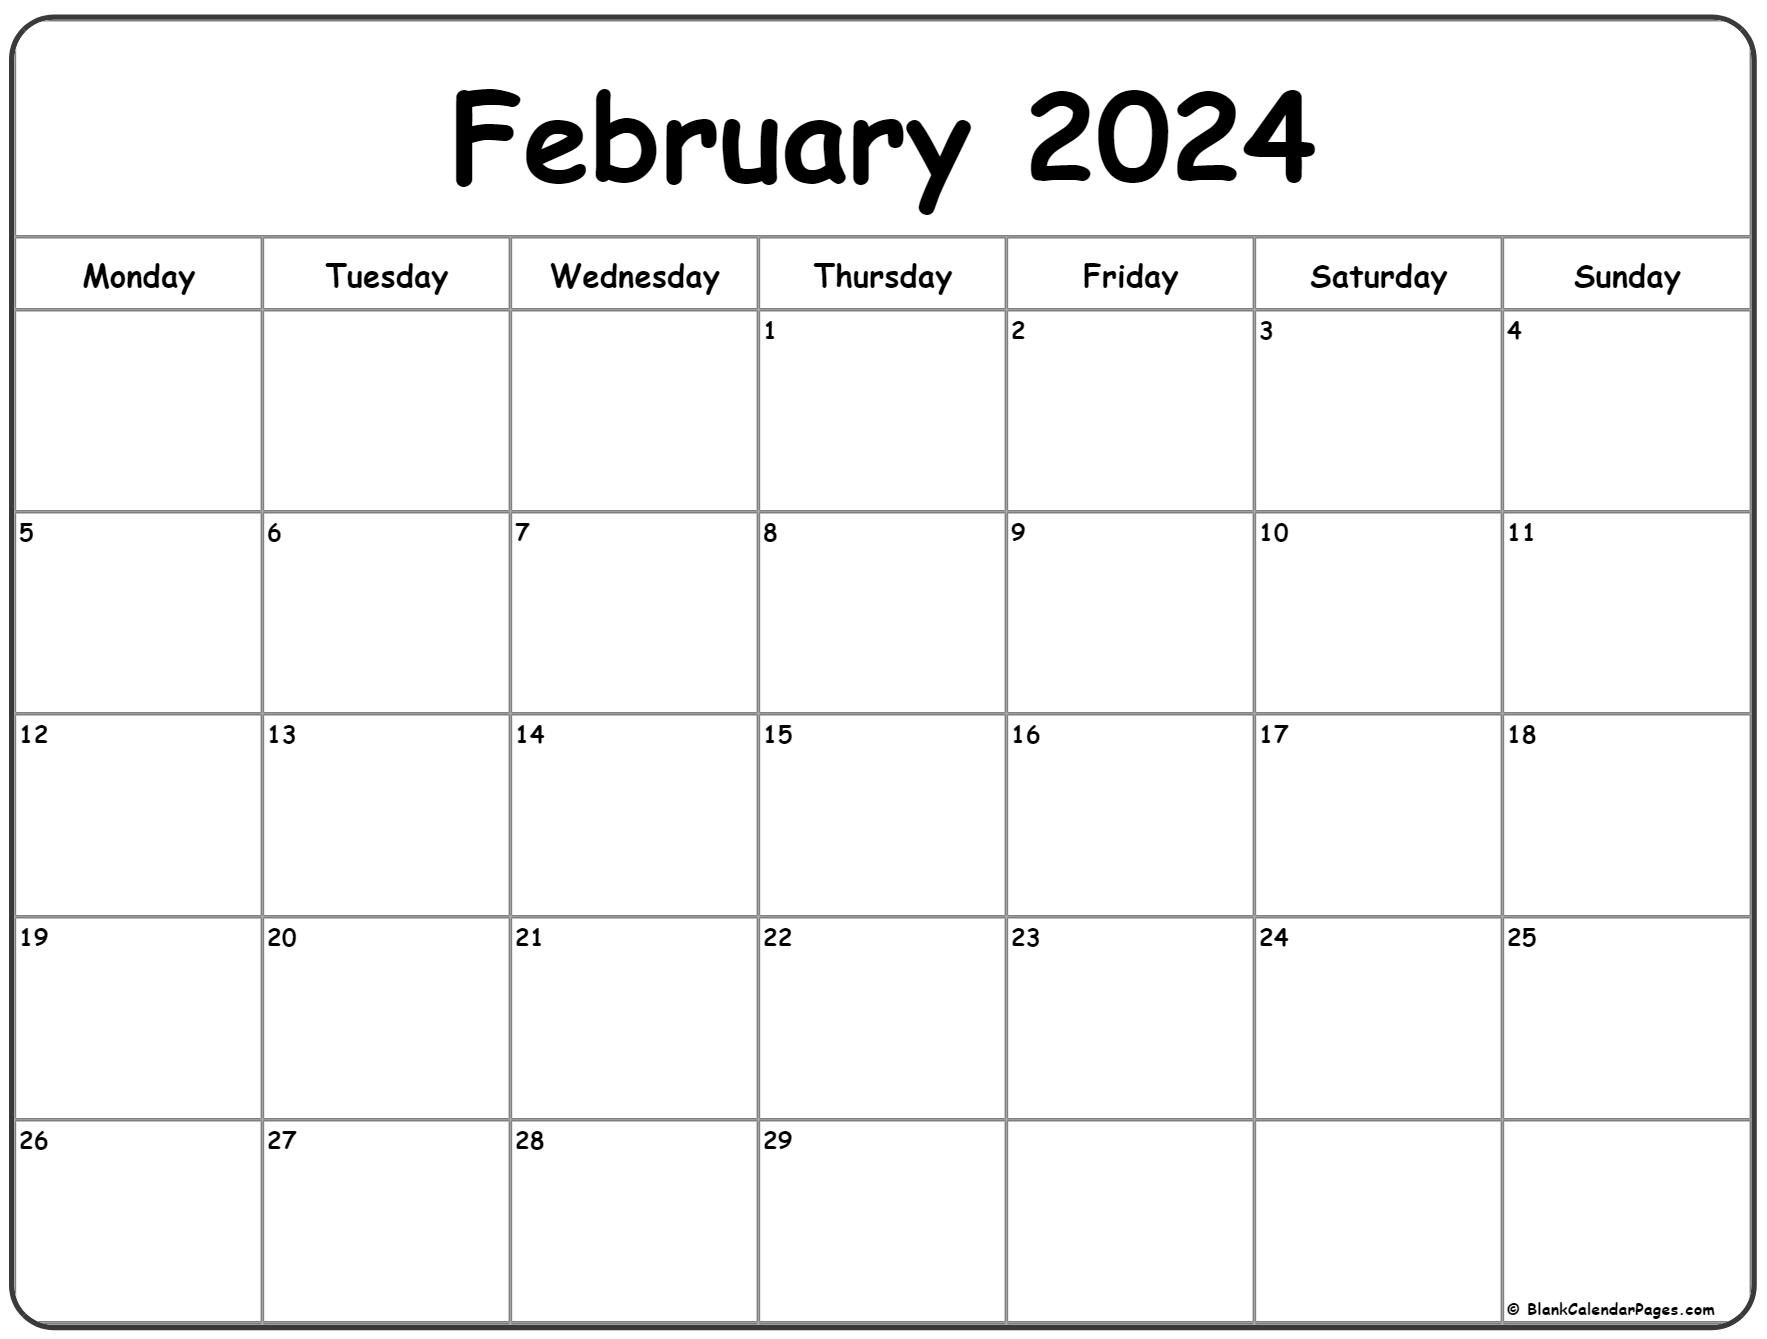 February 2022 Calendar Printable February 2022 Monday Calendar | Monday To Sunday